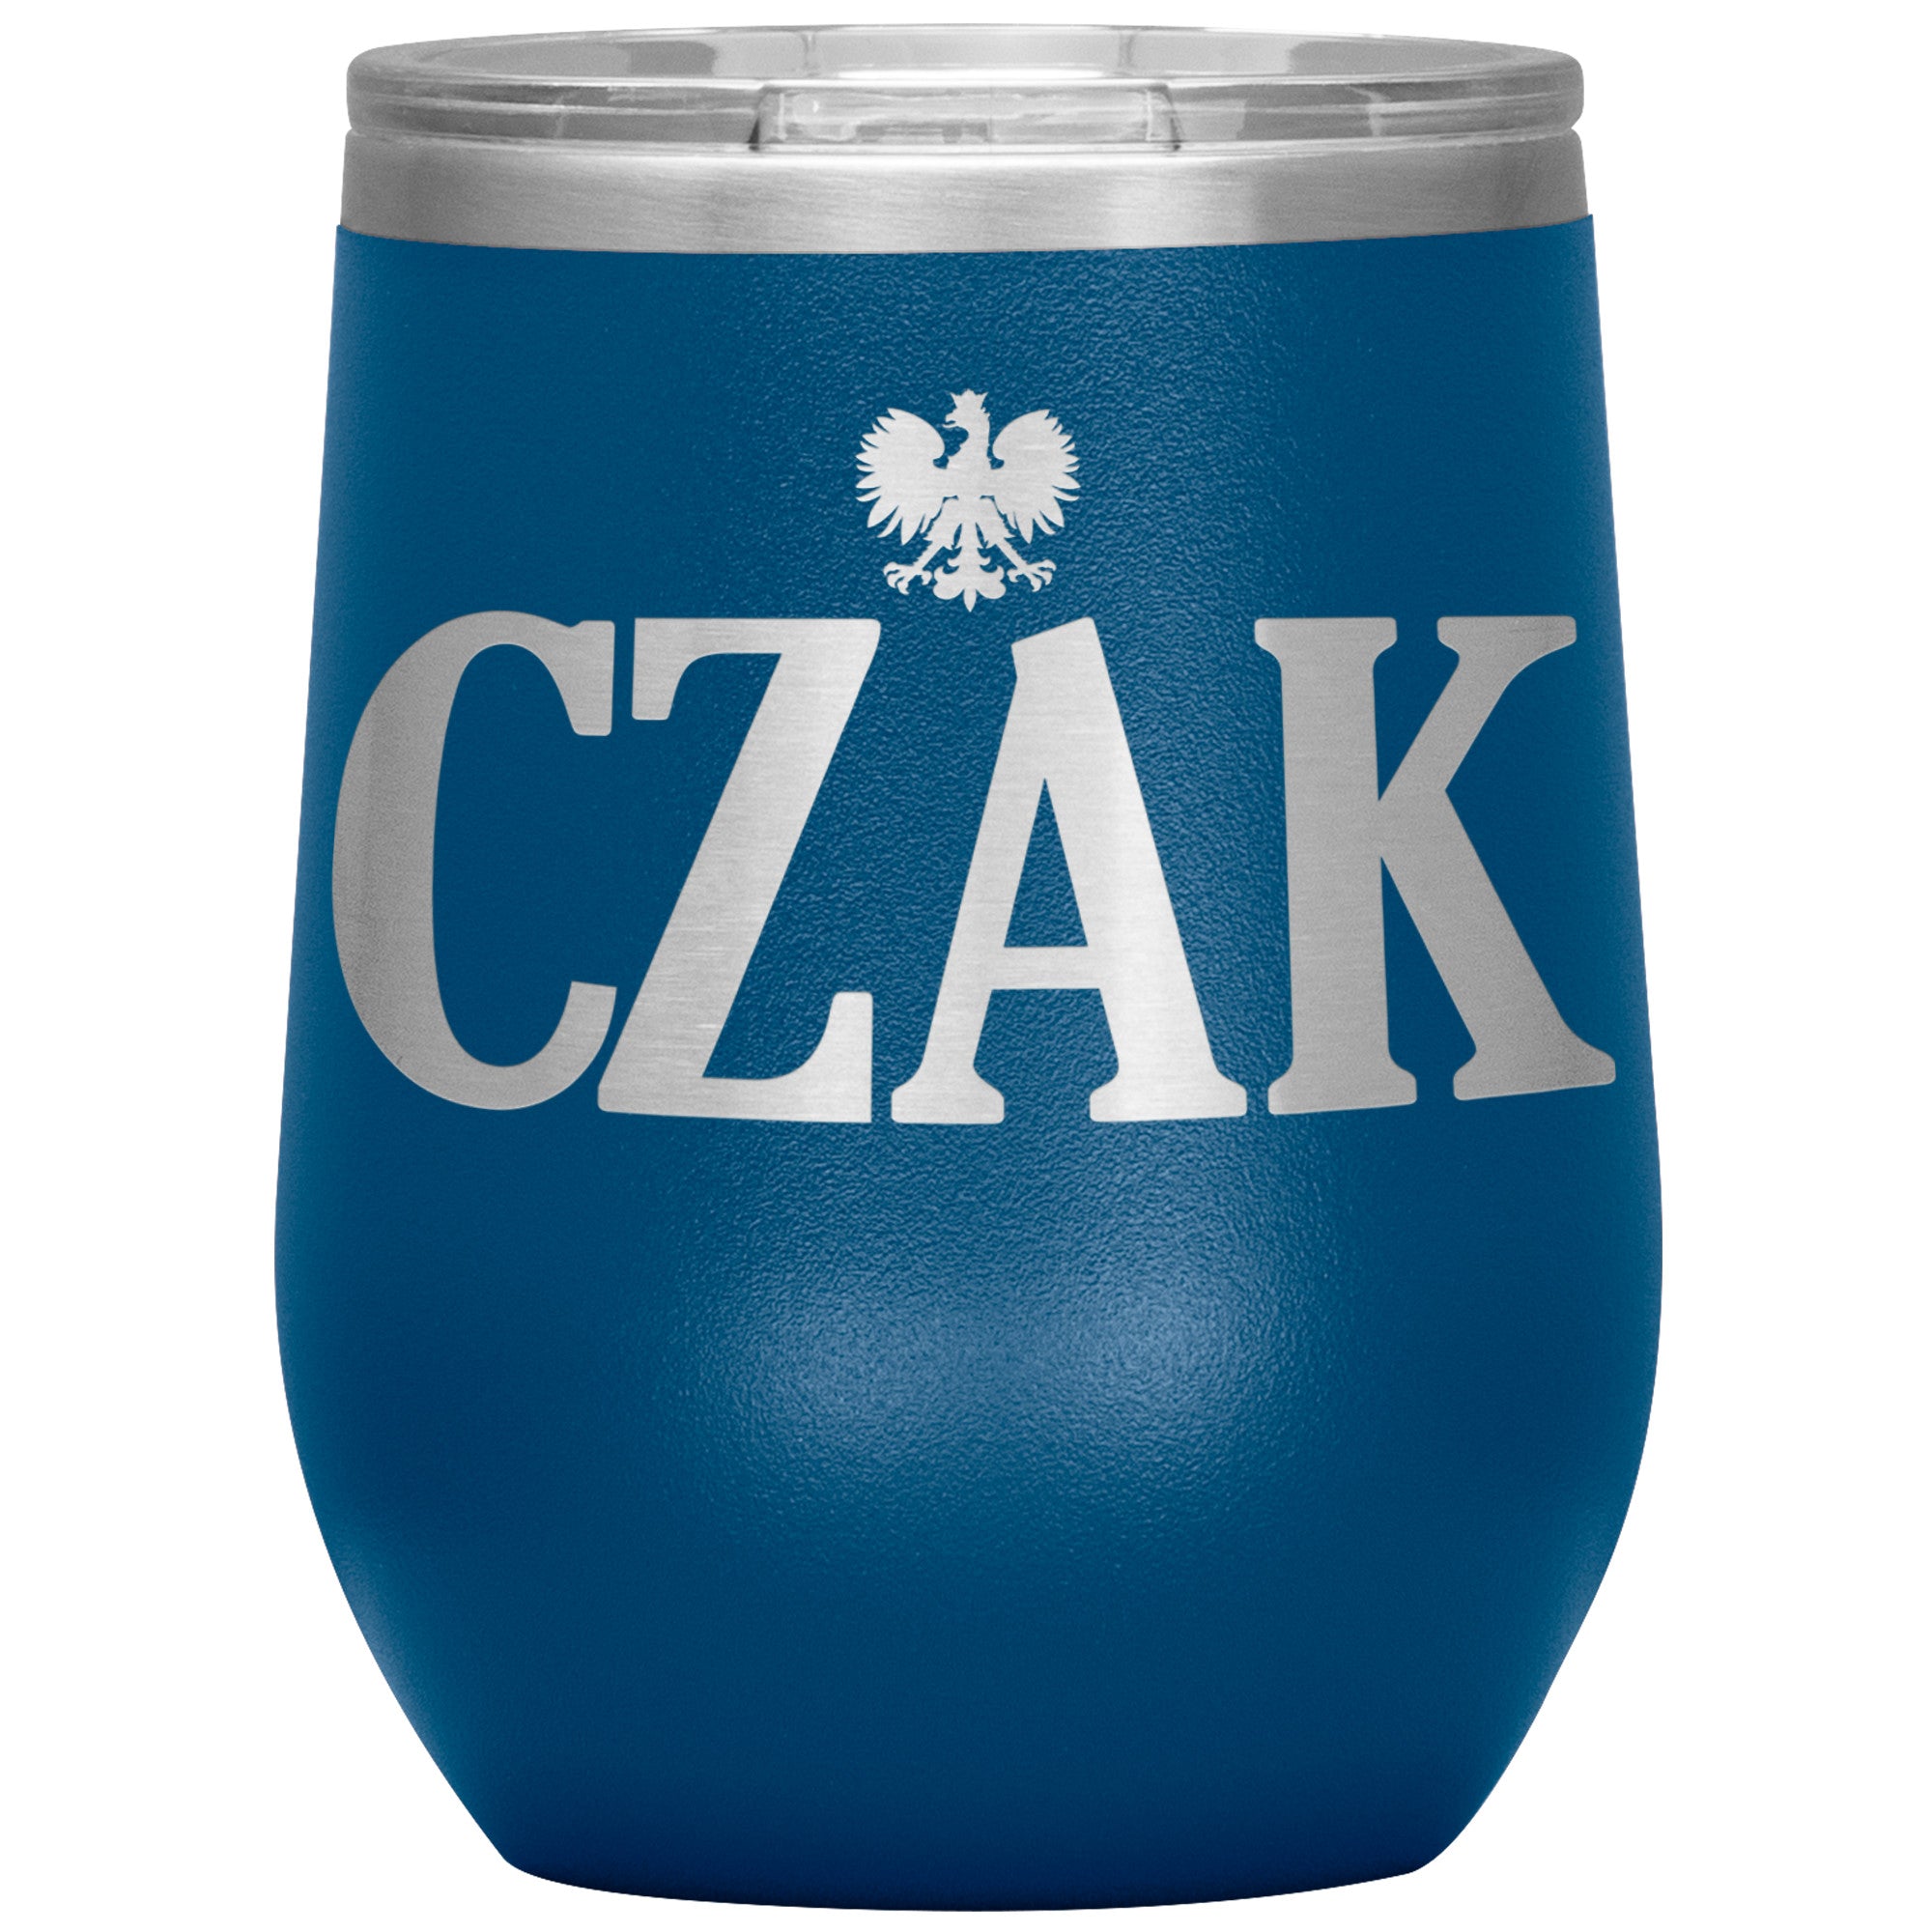 Polish Surnames Ending In CZAK Insulated Wine Tumbler Tumblers teelaunch Blue  